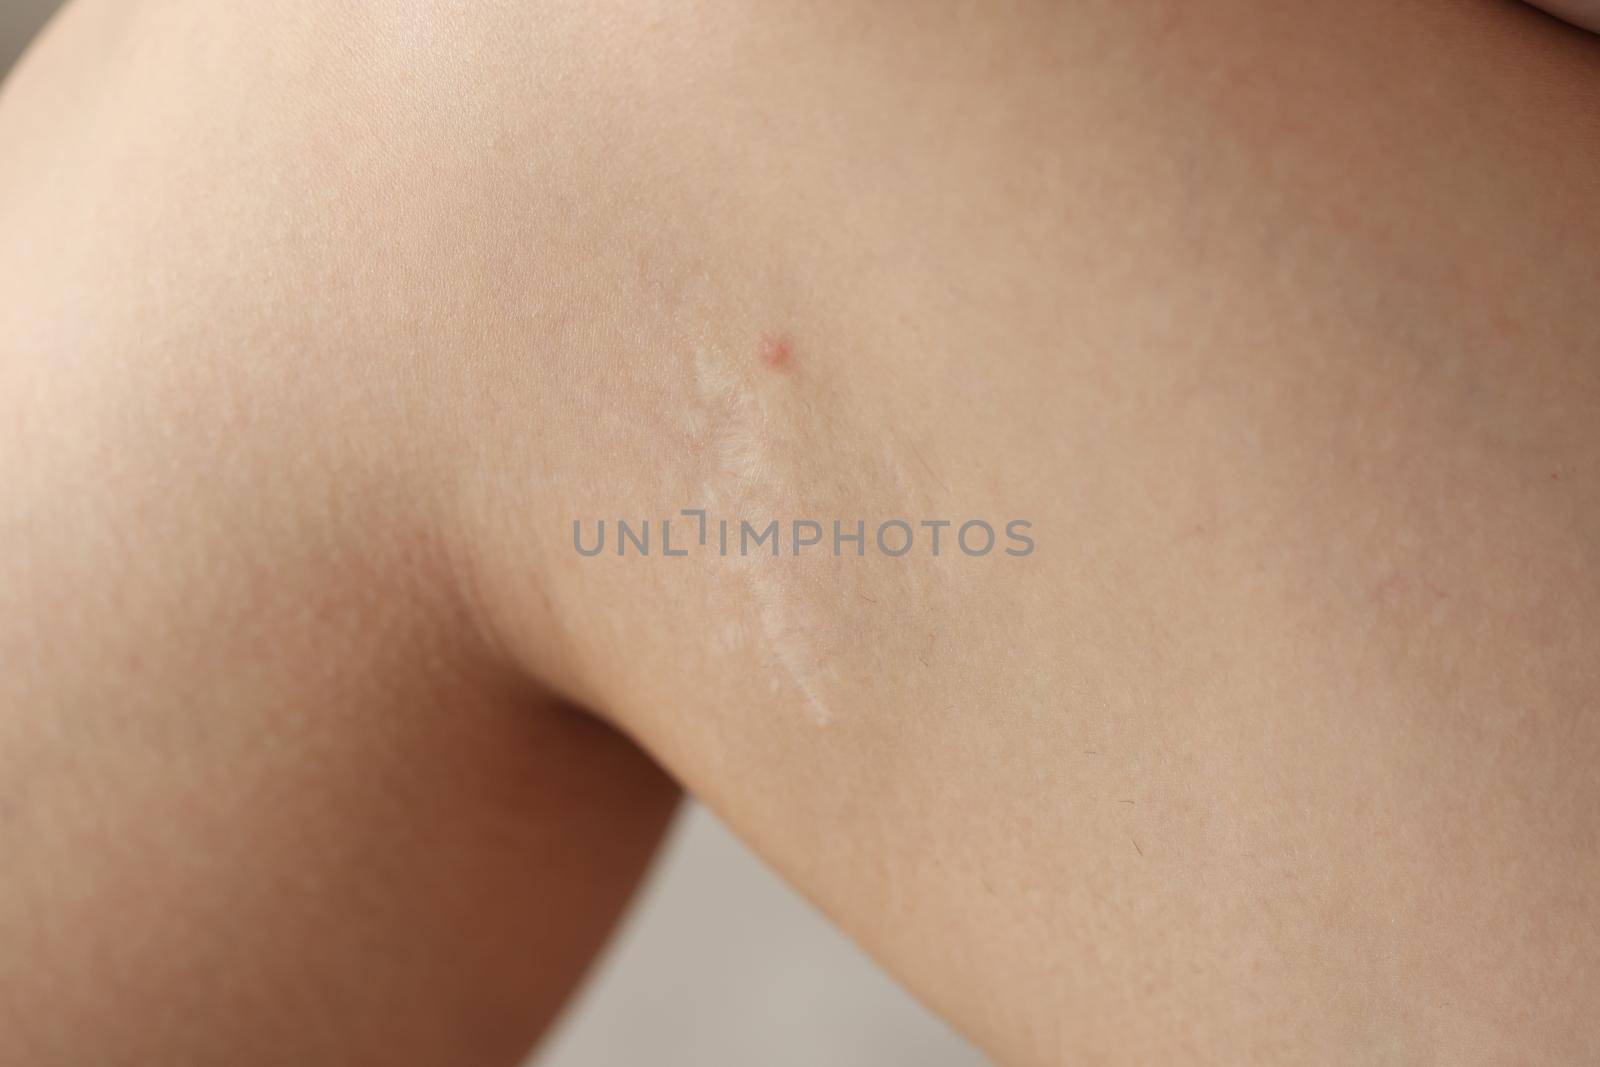 An inflamed pimple on the leg, close-up, shugaring. Skin irritation, dermatologist visit, problem skin